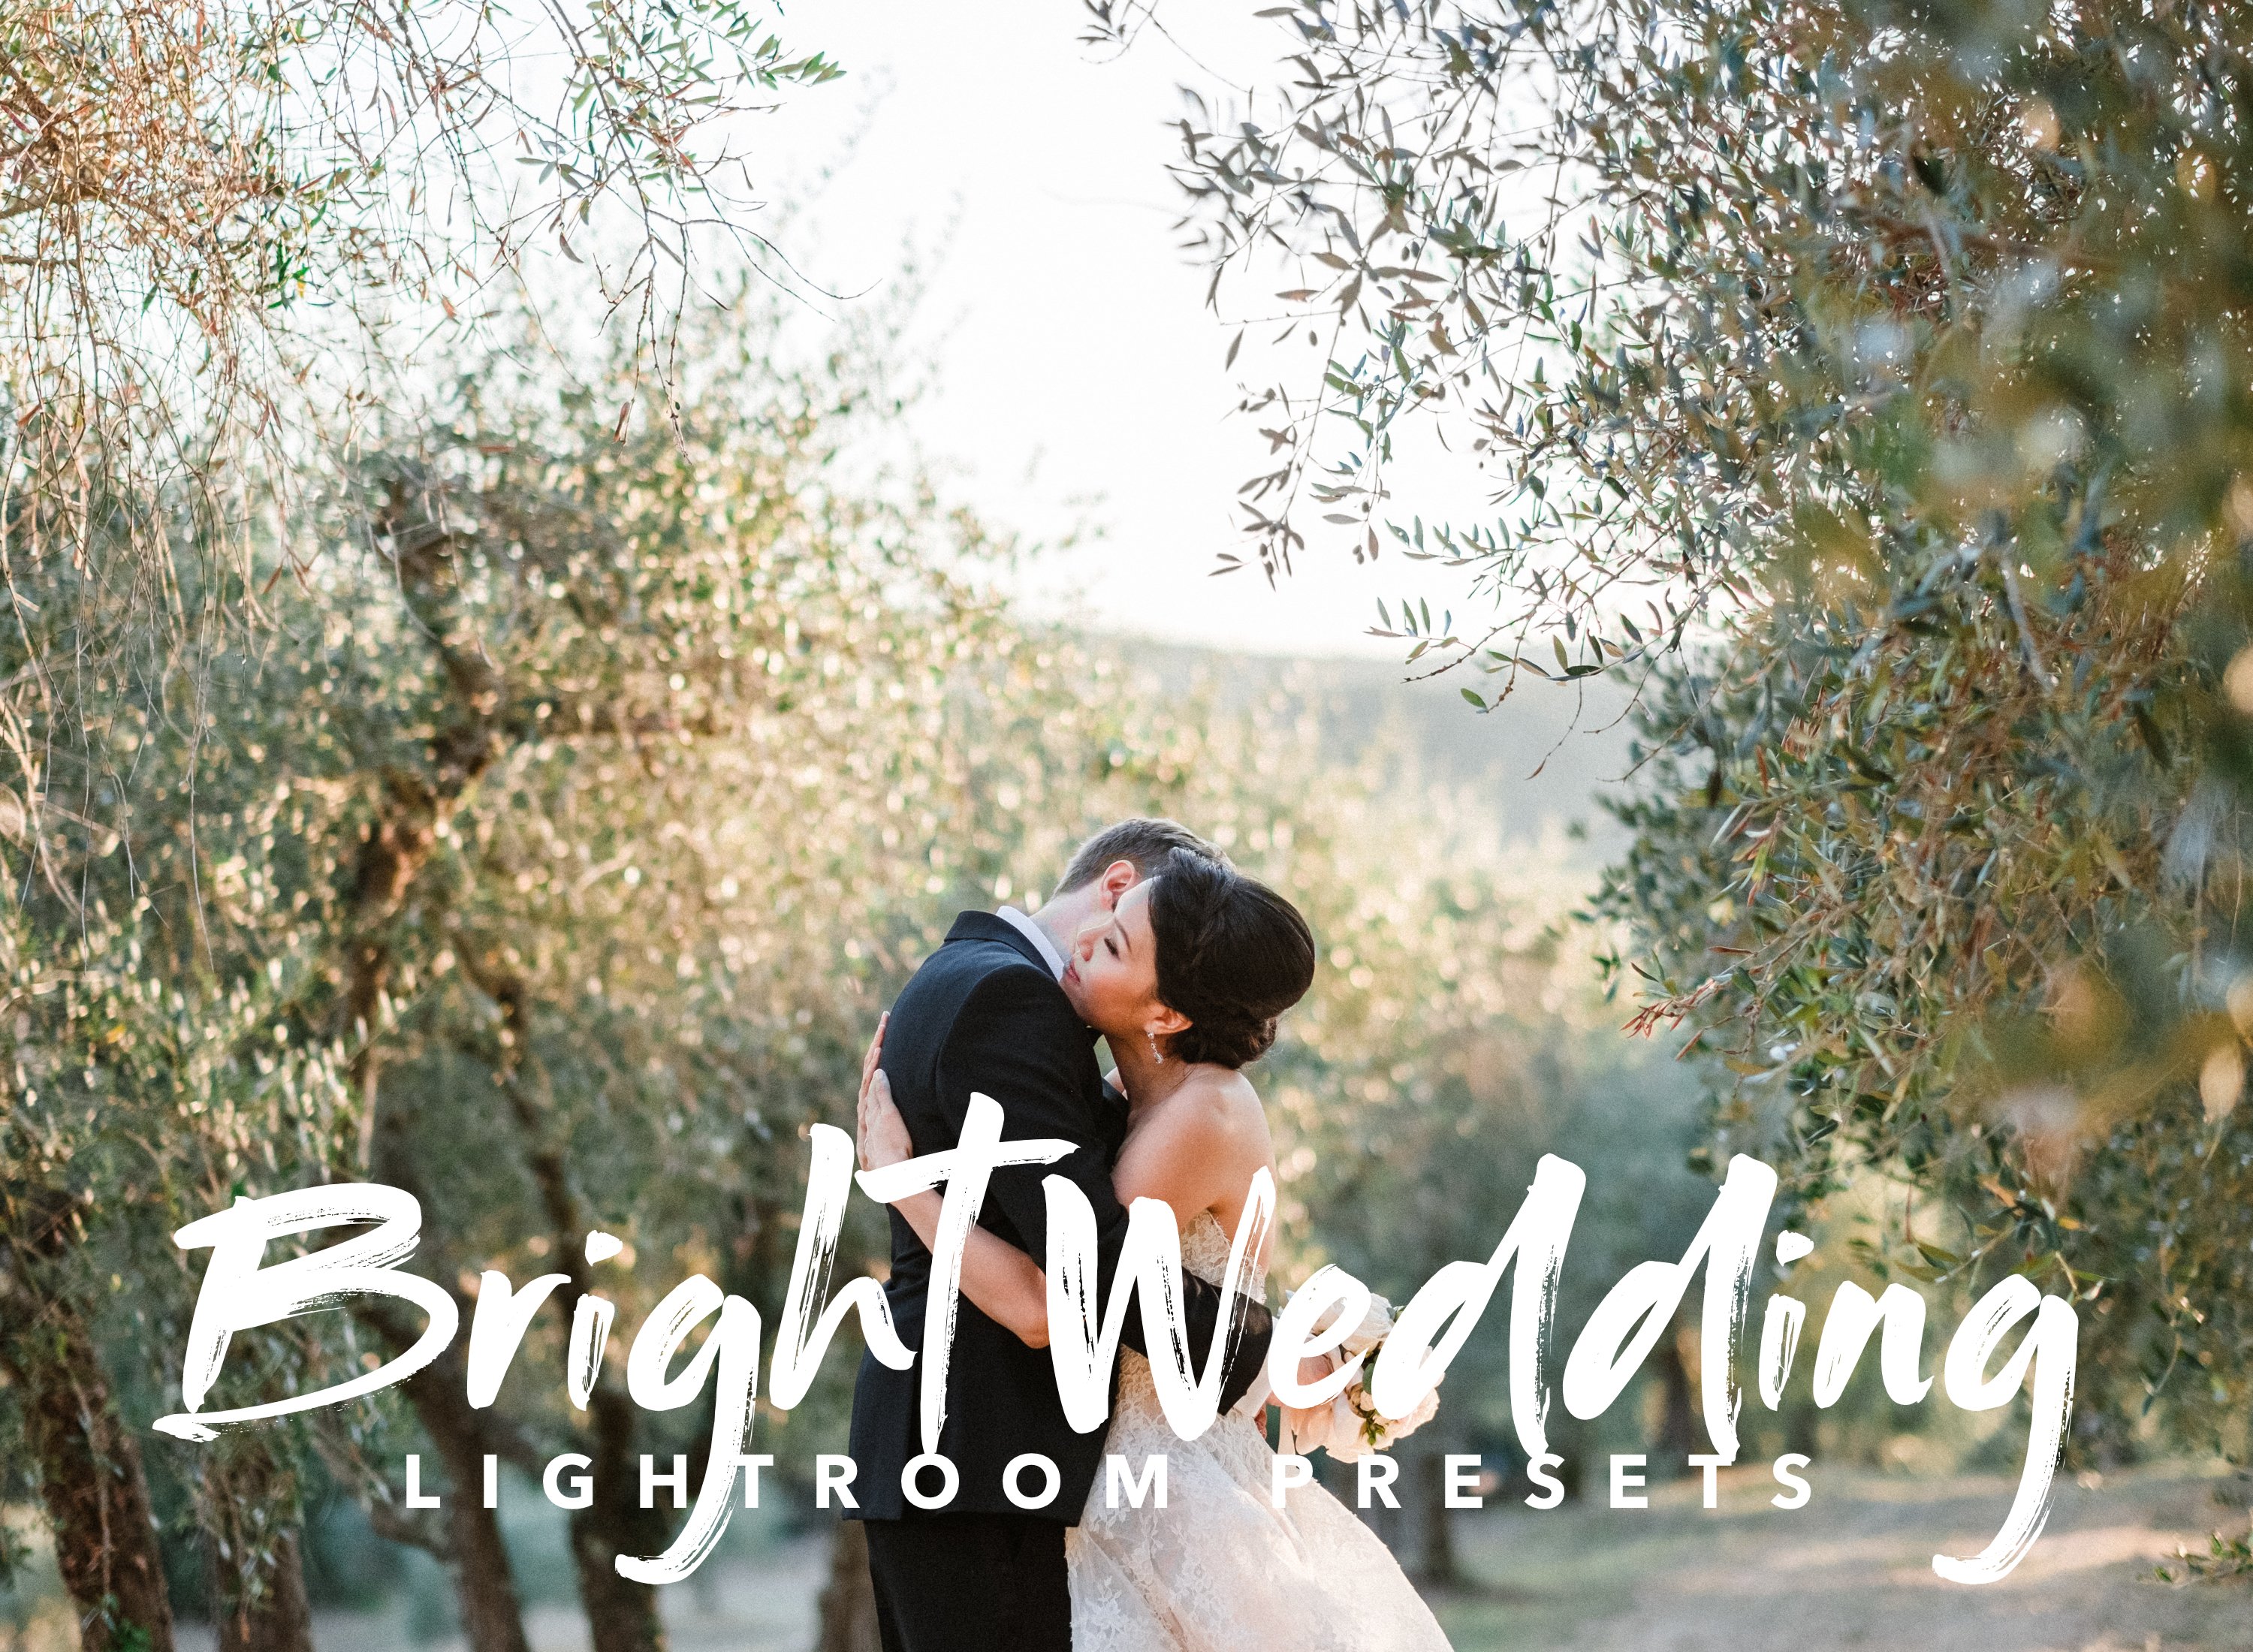 Bright Wedding - Lightroom Presetcover image.